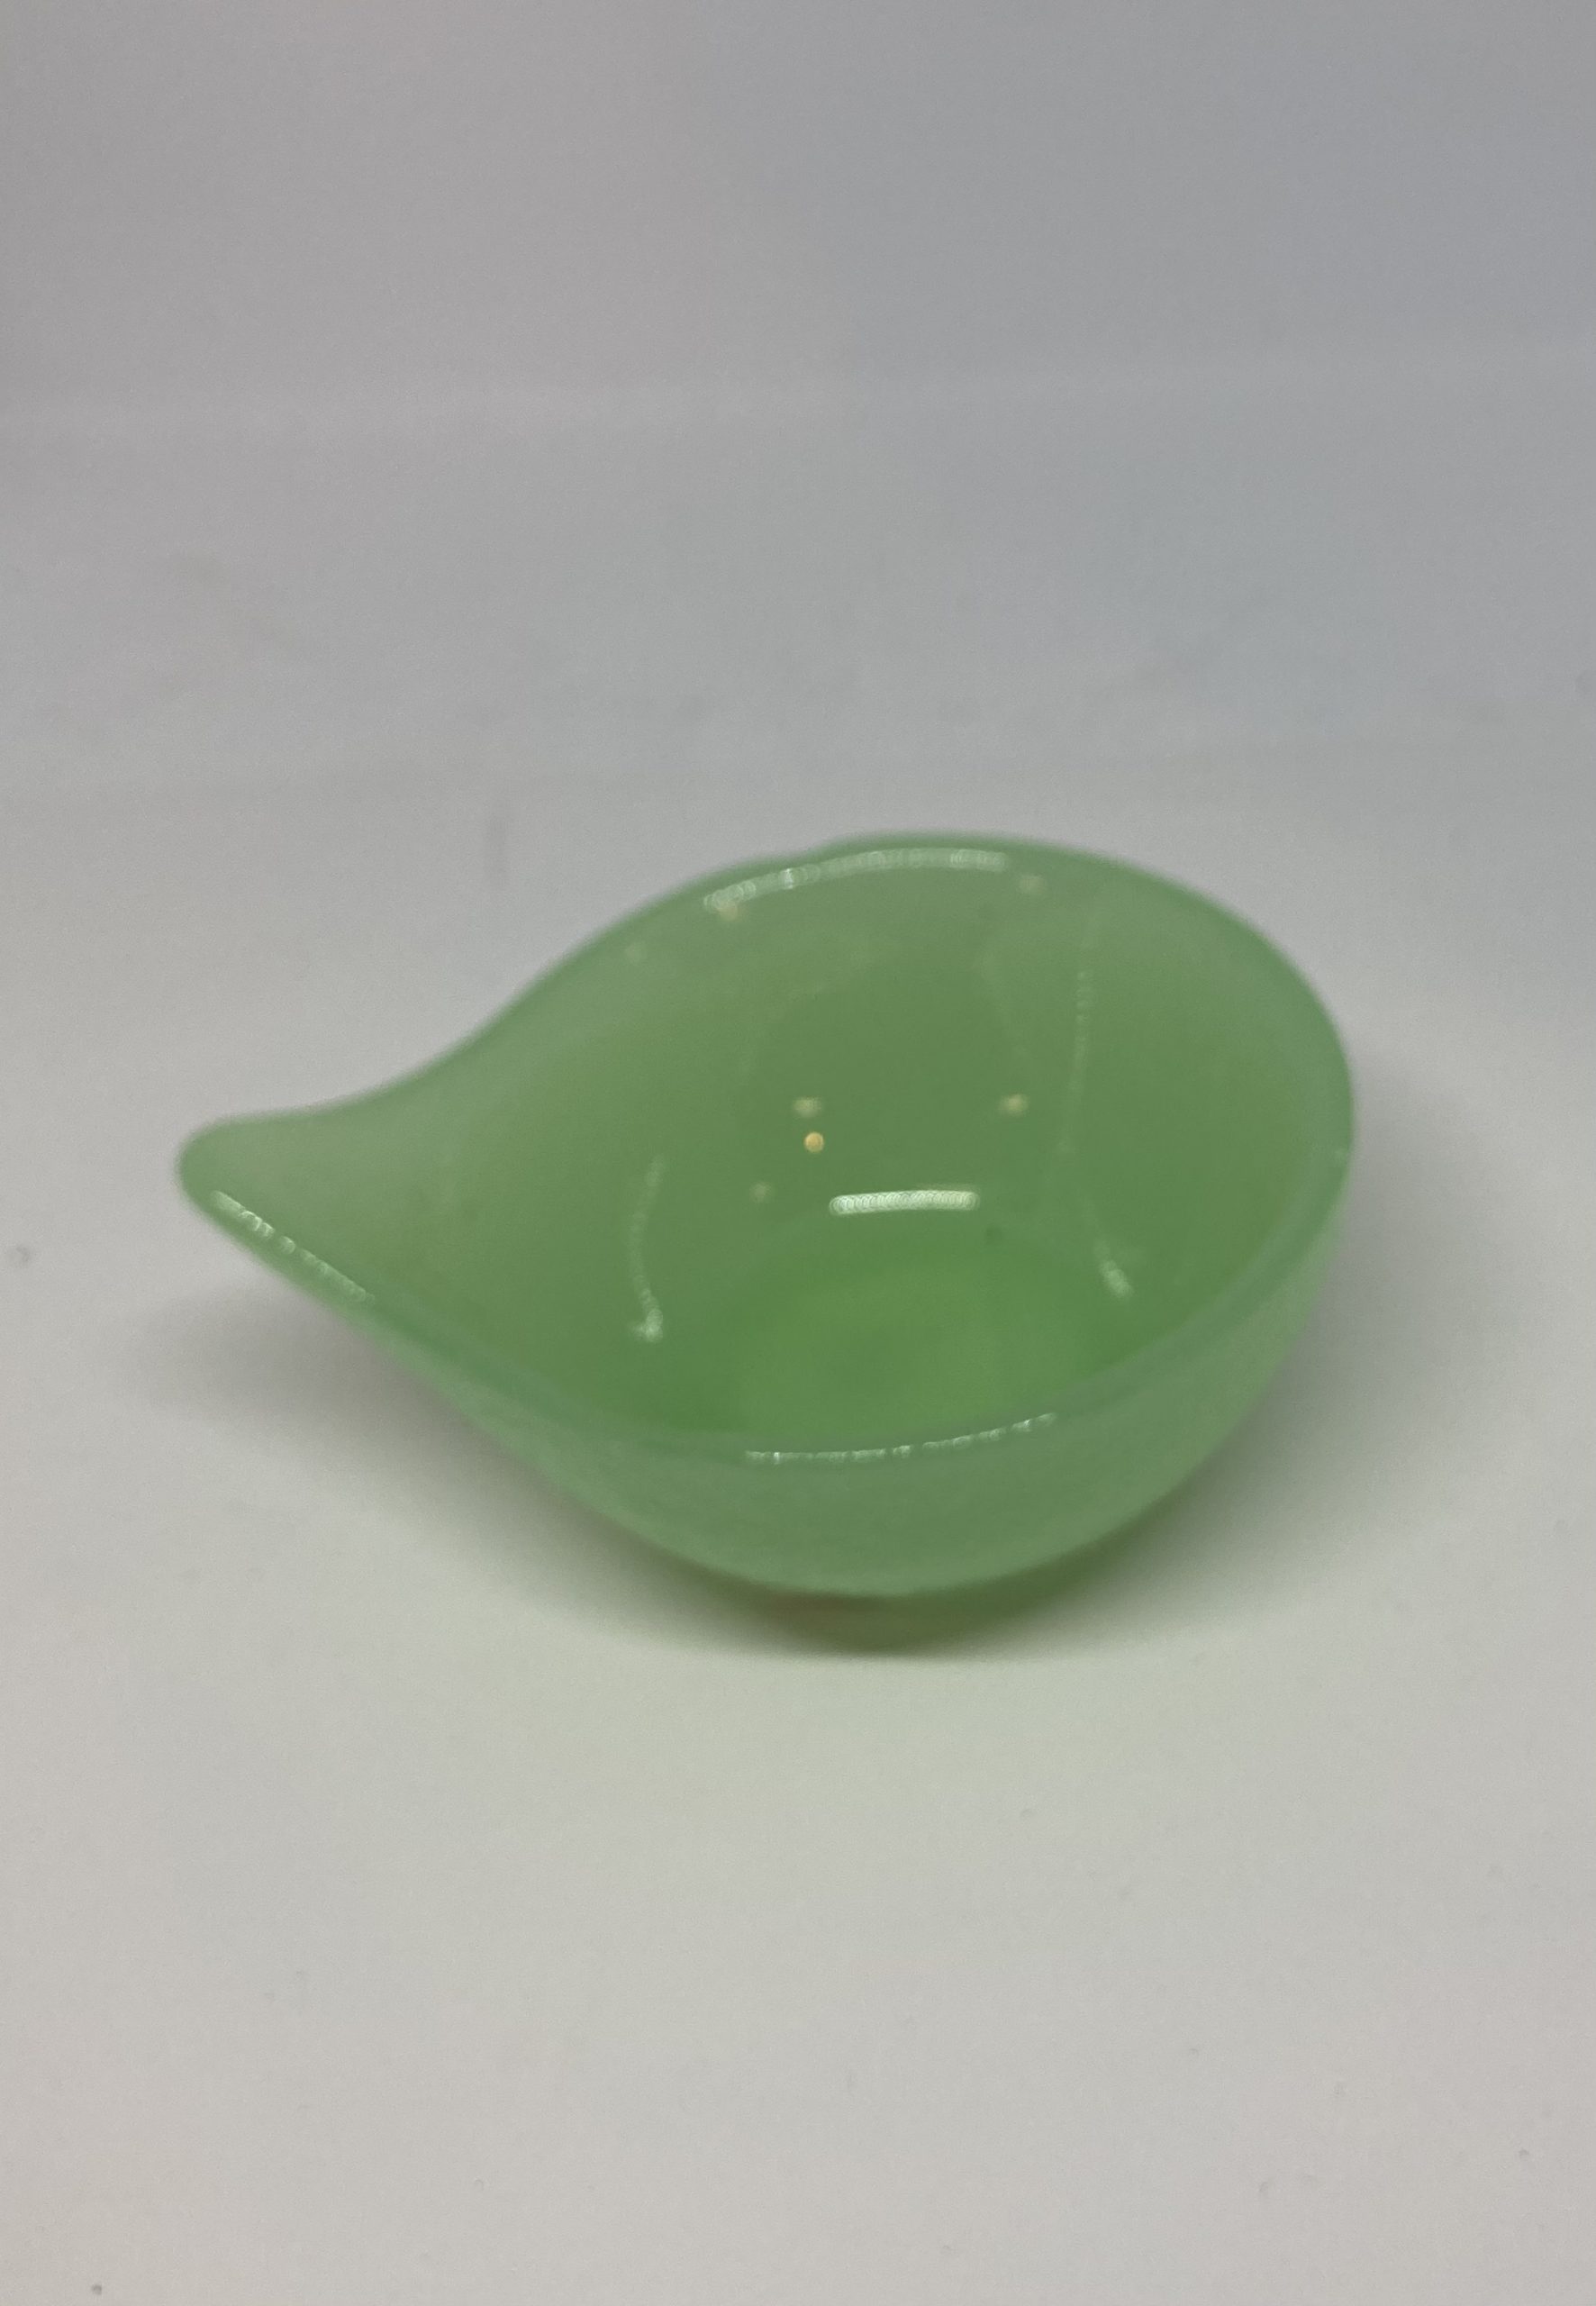 https://tallulahpoint.net/wp-content/uploads/2020/12/jadeite-mini-bowl-inside-scaled.jpg